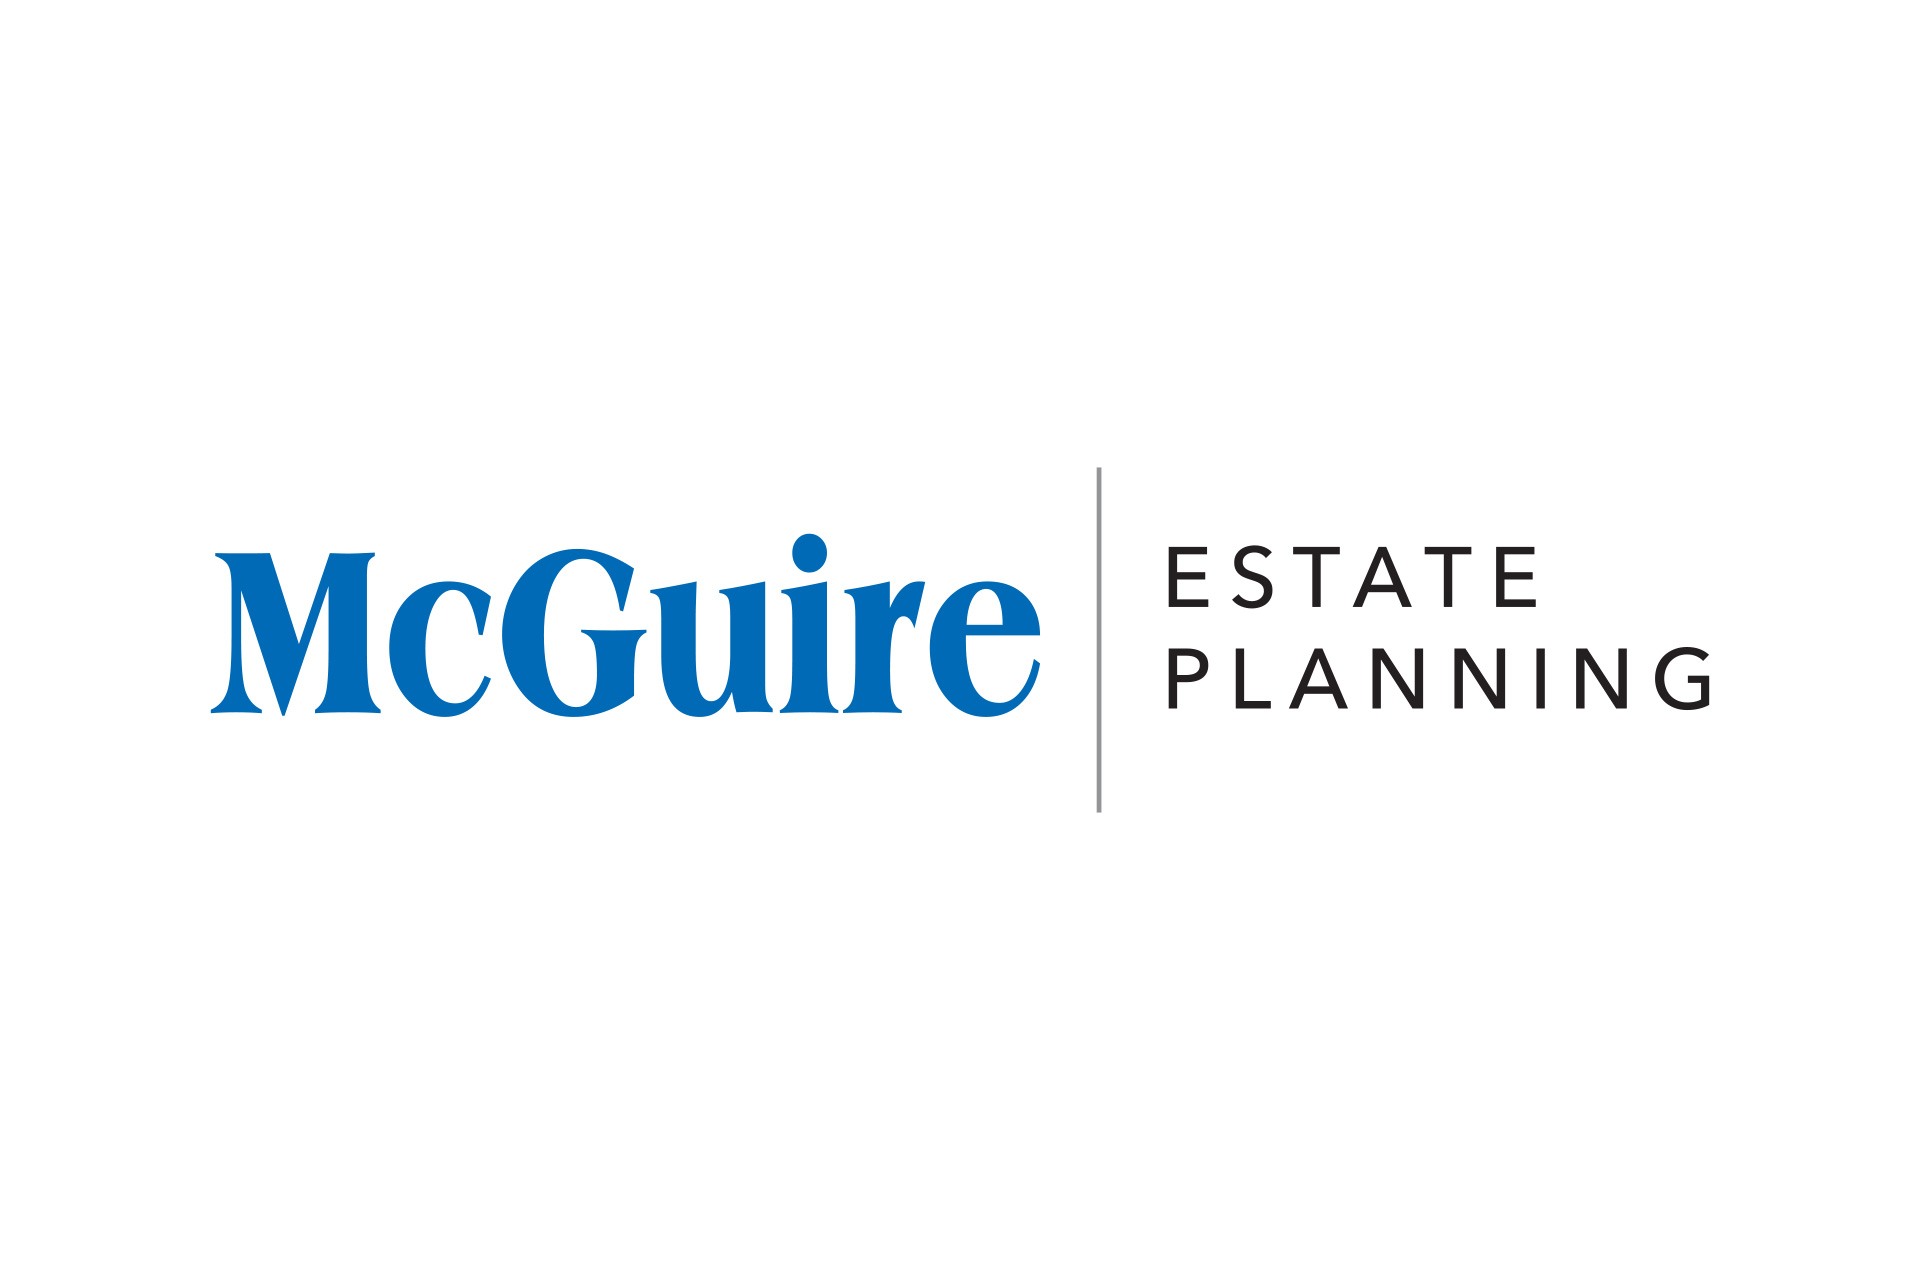 McGuire Estate Planning